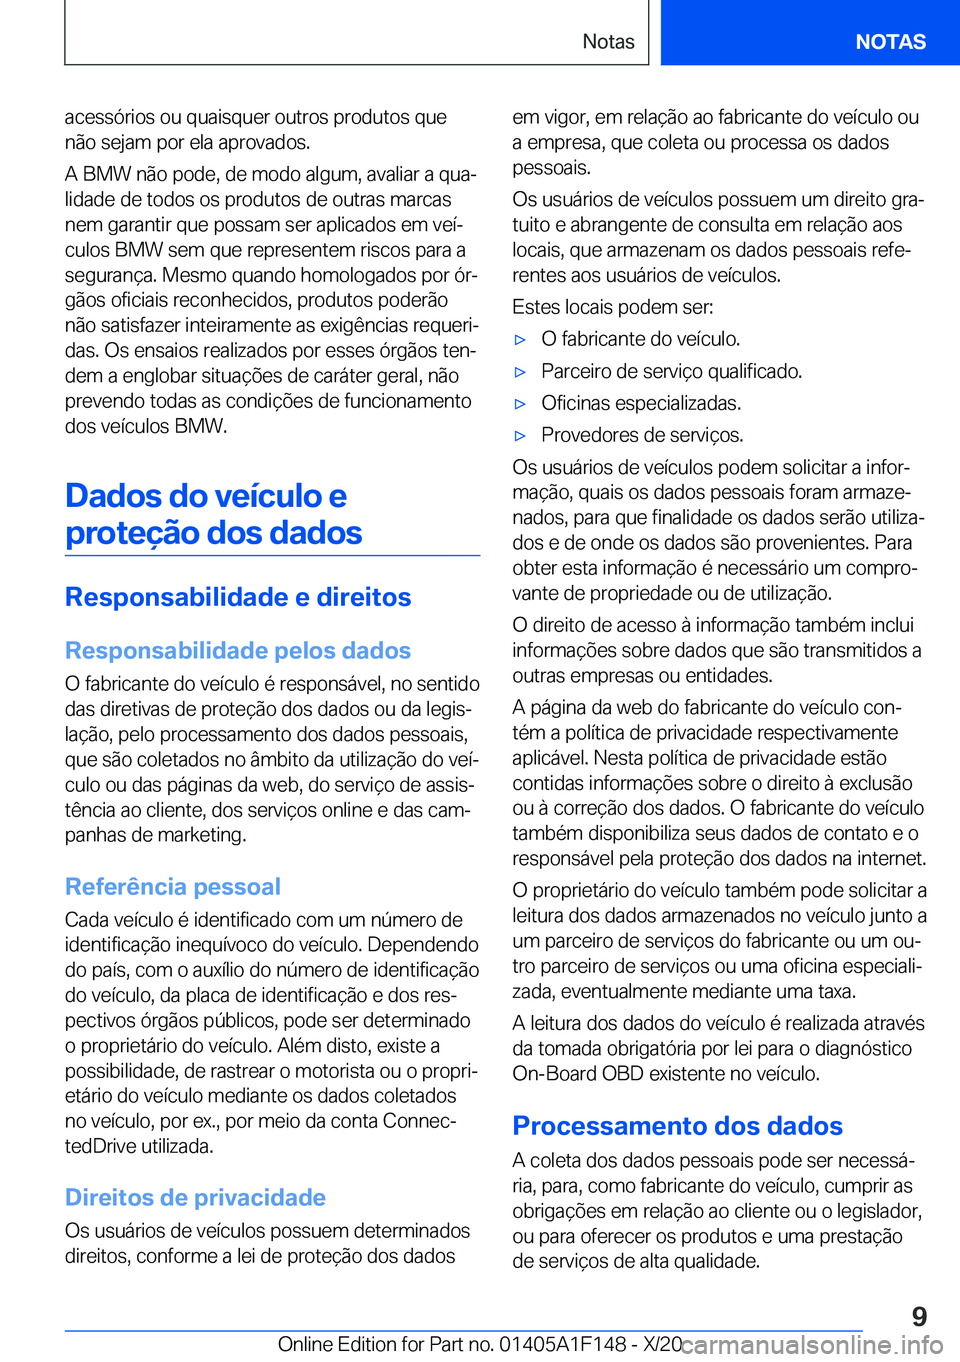 BMW X6 2021  Manual do condutor (in Portuguese) �a�c�e�s�s�ó�r�i�o�s��o�u��q�u�a�i�s�q�u�e�r��o�u�t�r�o�s��p�r�o�d�u�t�o�s��q�u�e
�n�ã�o��s�e�j�a�m��p�o�r��e�l�a��a�p�r�o�v�a�d�o�s�.
�A��B�M�W��n�ã�o��p�o�d�e�,��d�e��m�o�d�o��a�l�